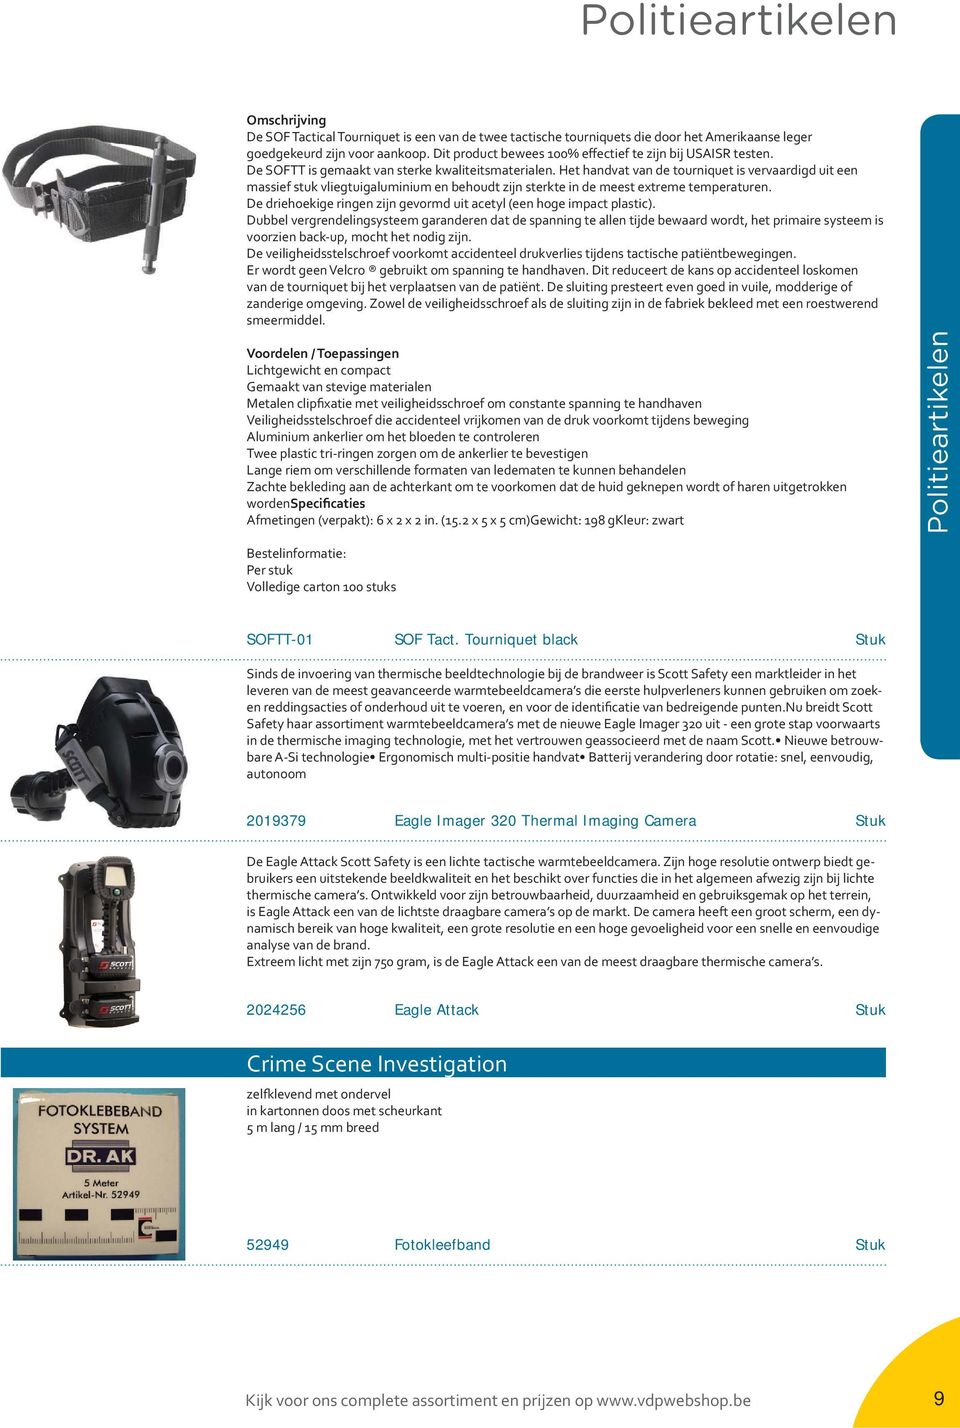 Tourniquet black Stuk - autonoom 2019379 Eagle Imager 320 Thermal Imaging